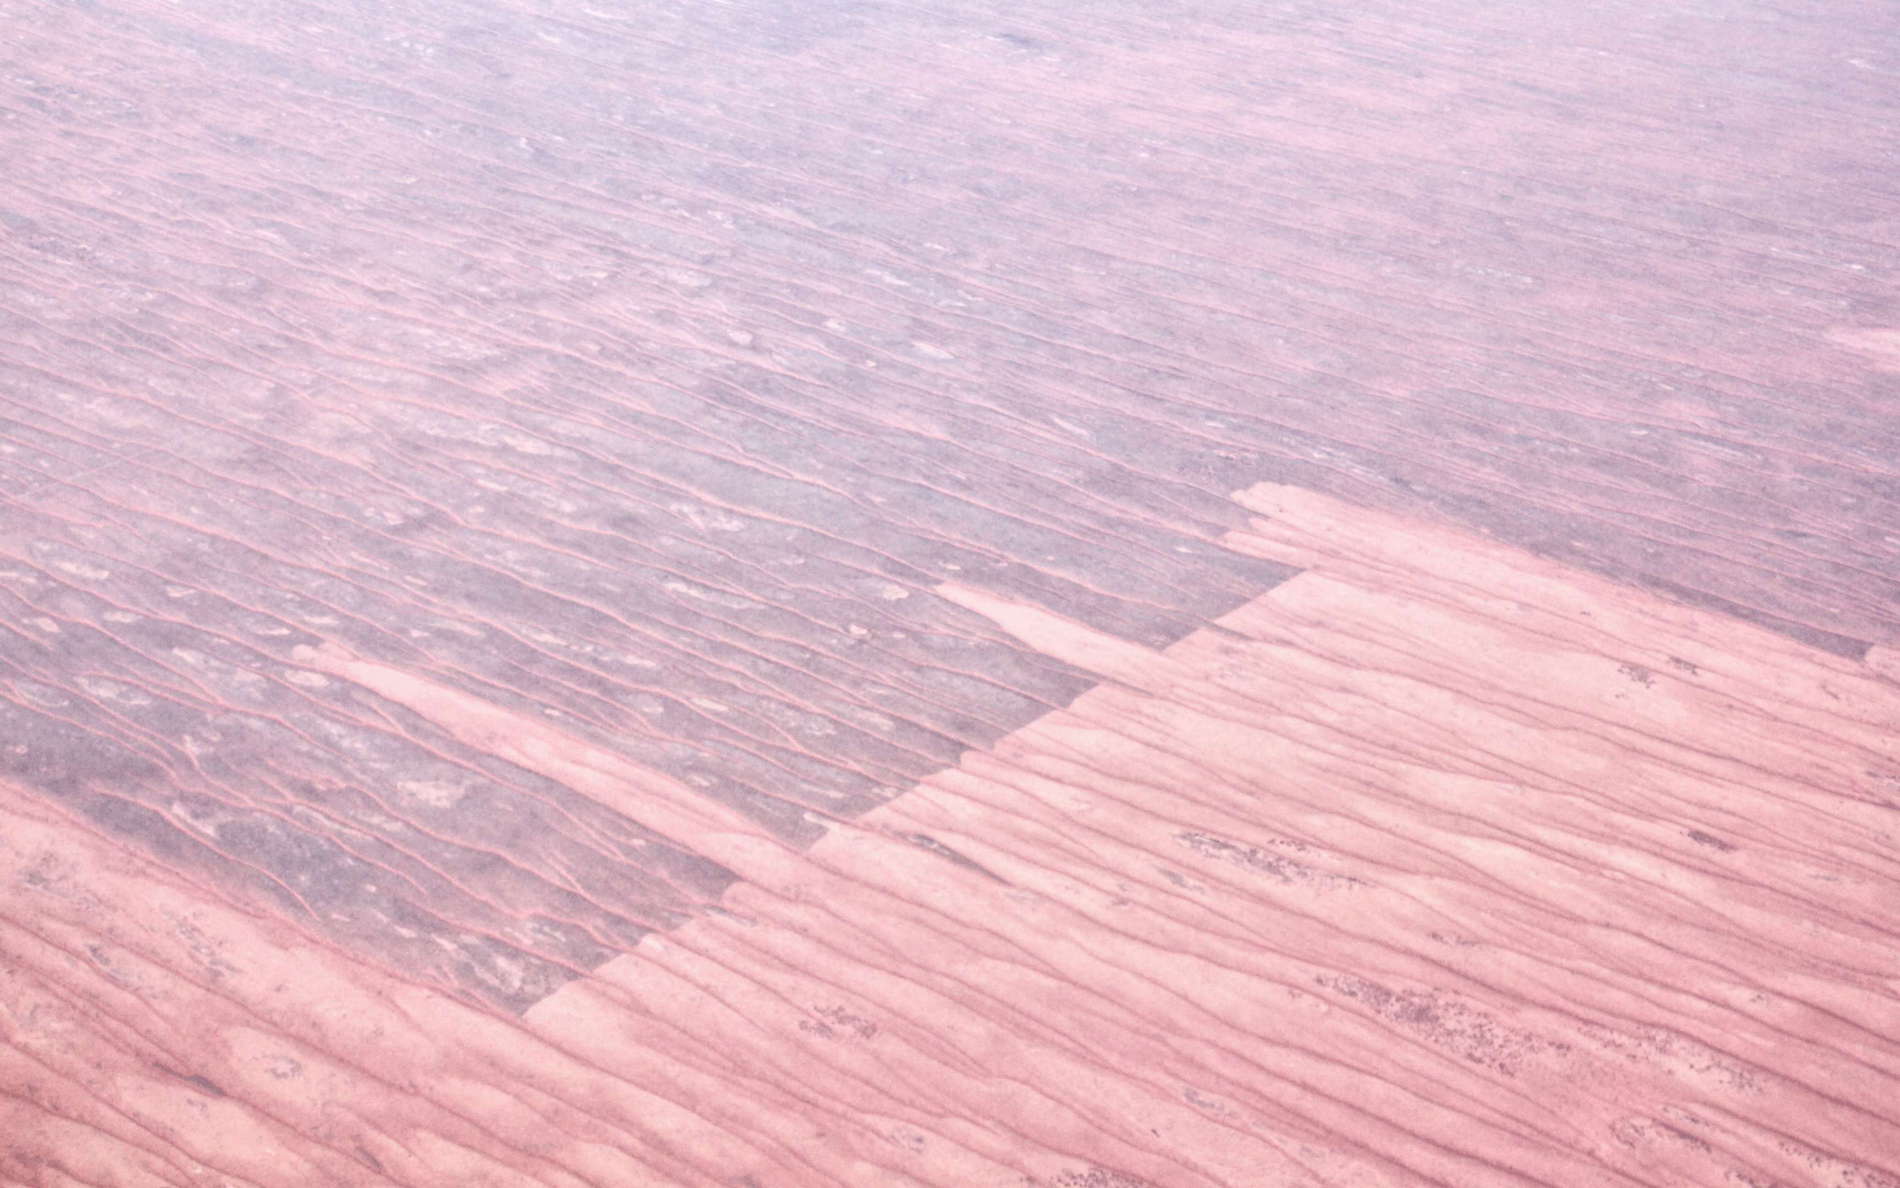 Simpson Desert  |  Longitudinal dunes